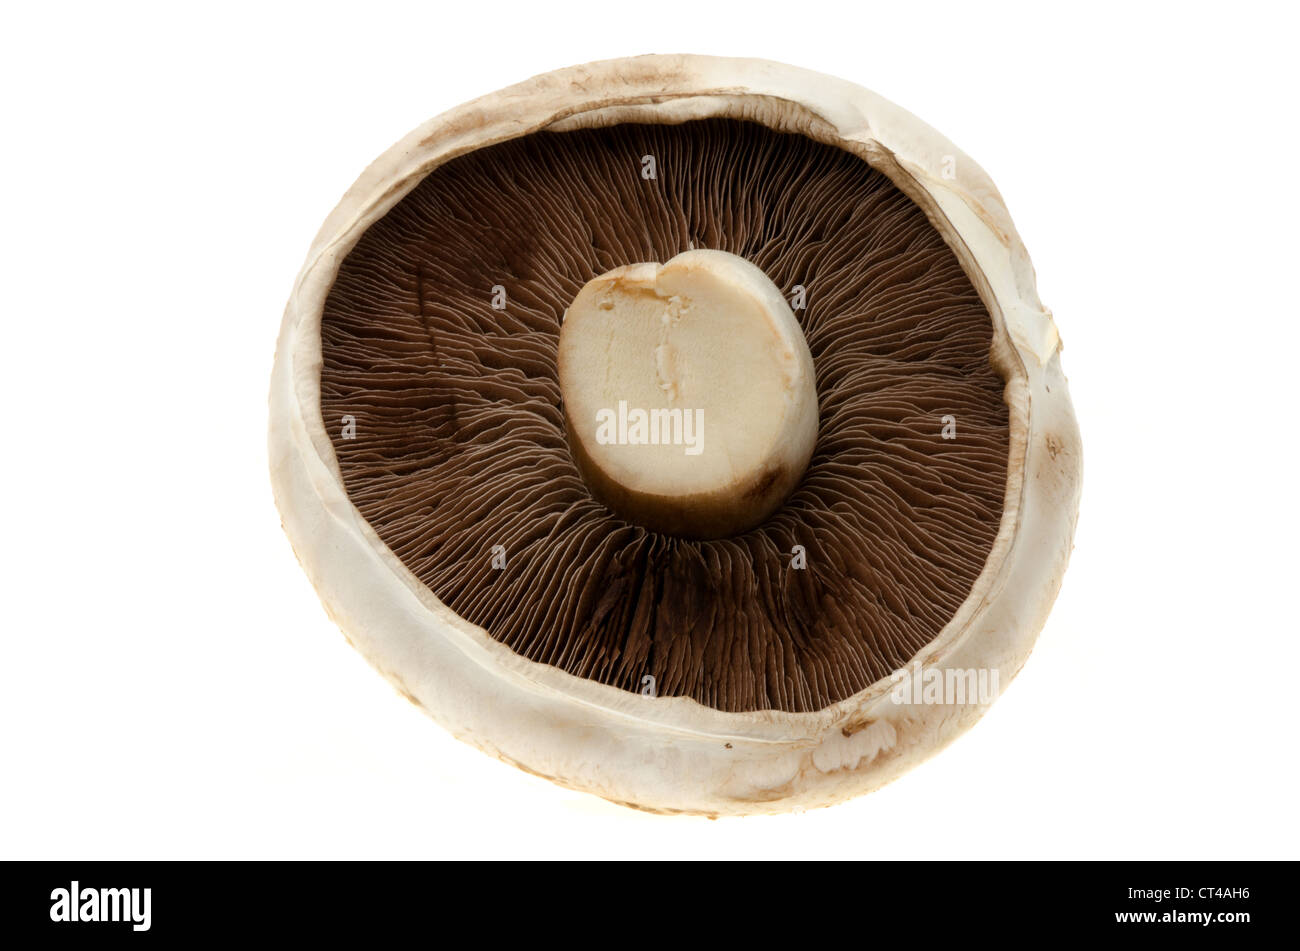 Fresh mushroom - studio shot with a white background Stock Photo